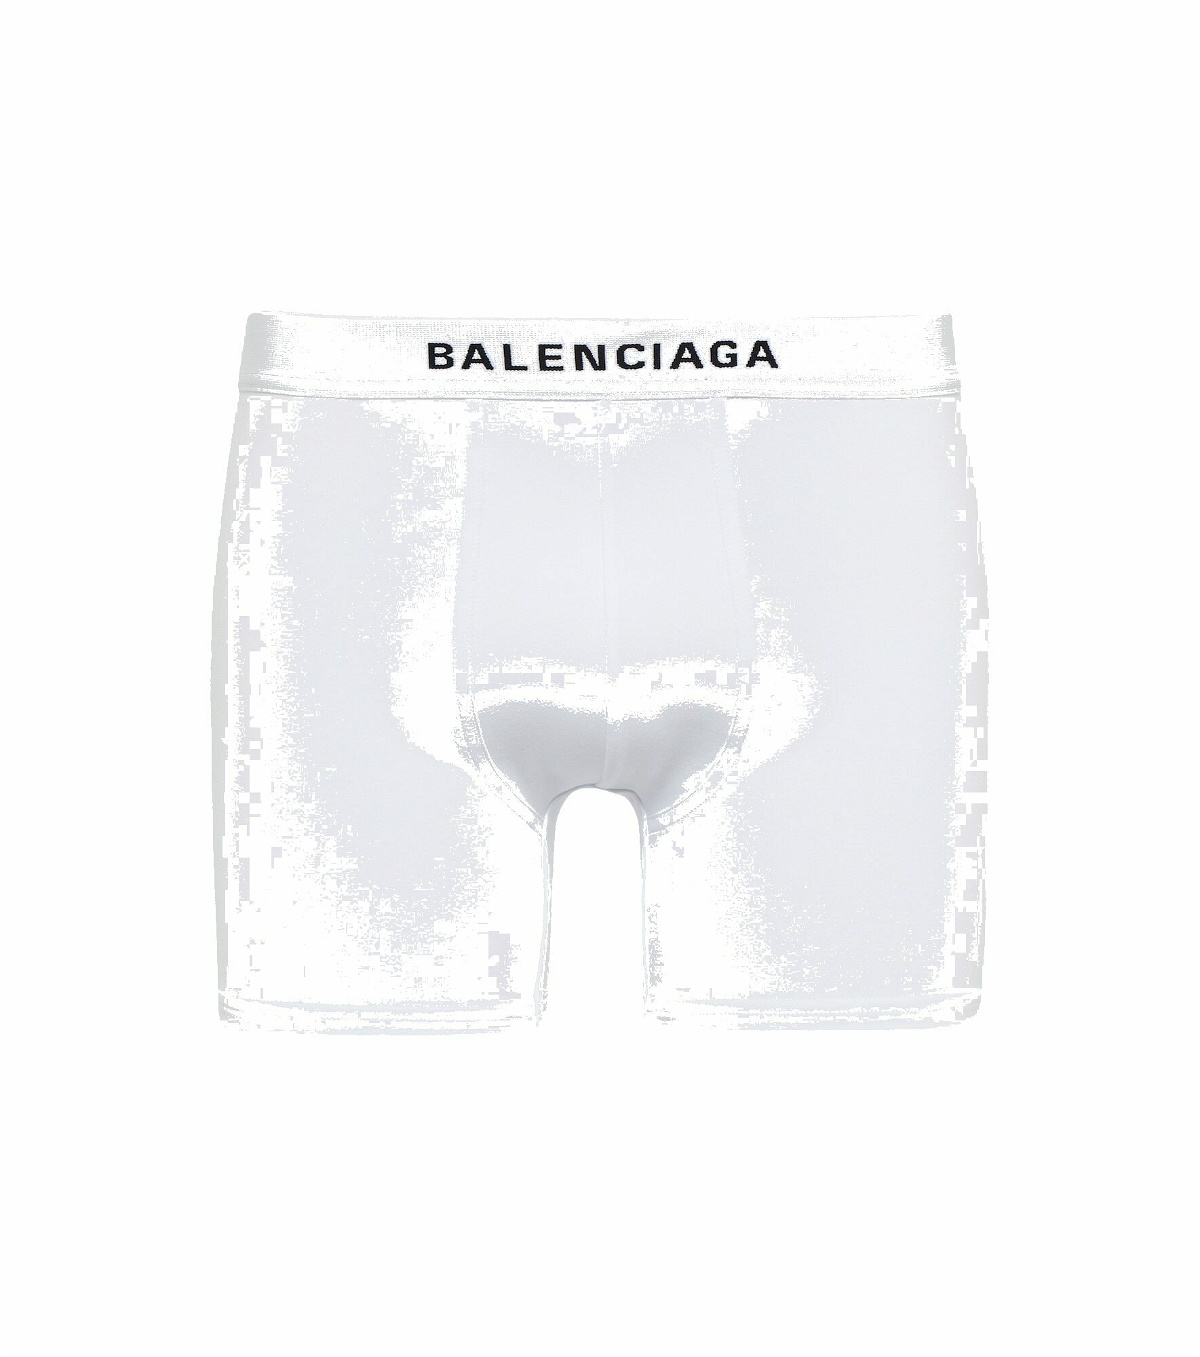 Buy Balenciaga Racer Logo Waistband Briefs 'White' - 766943 4B7B2 9060